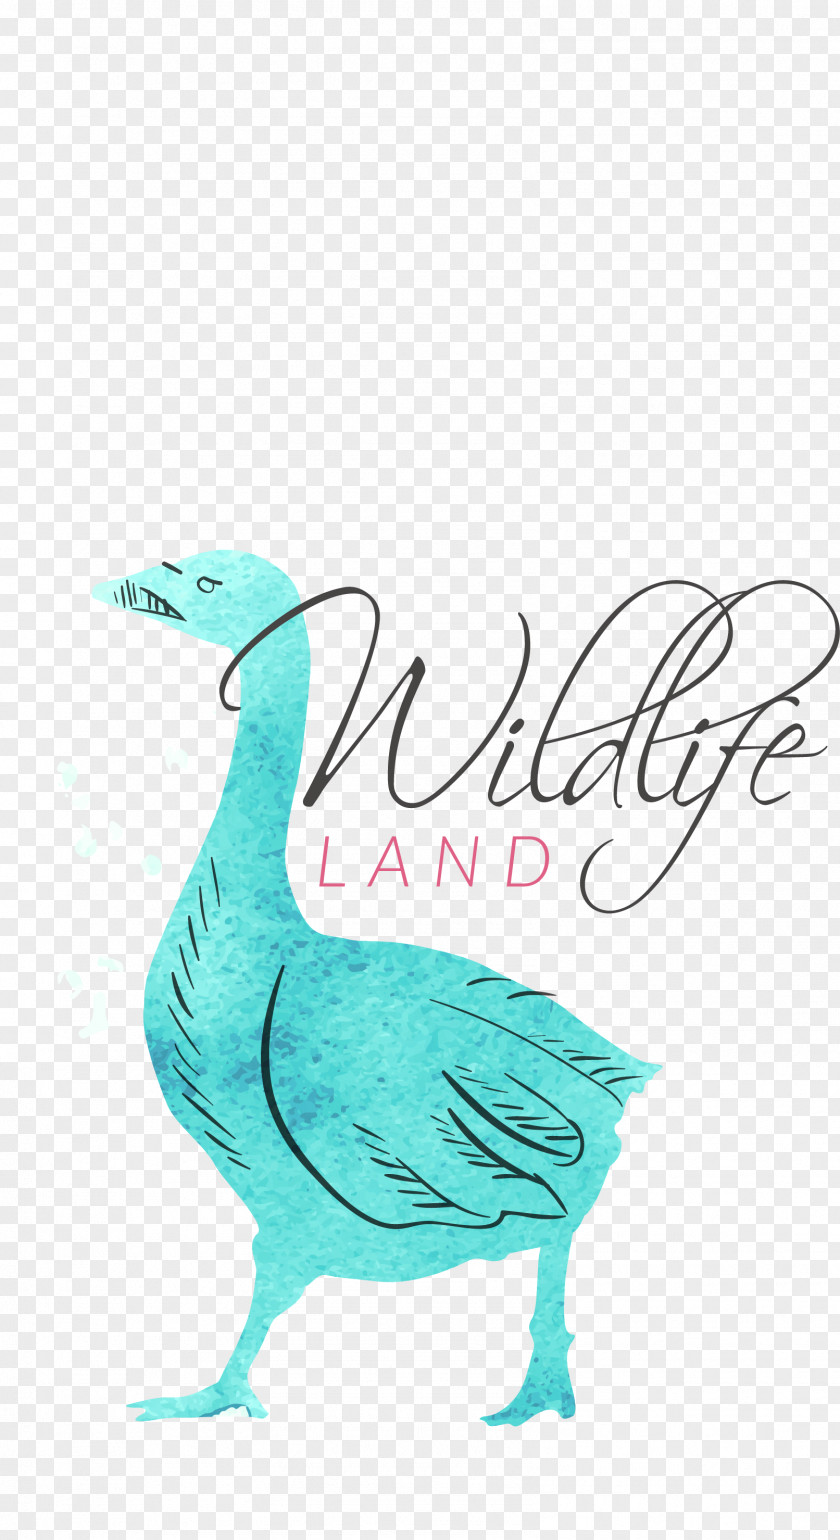 Vector Ducks Watercolor Painting Logo Illustration PNG